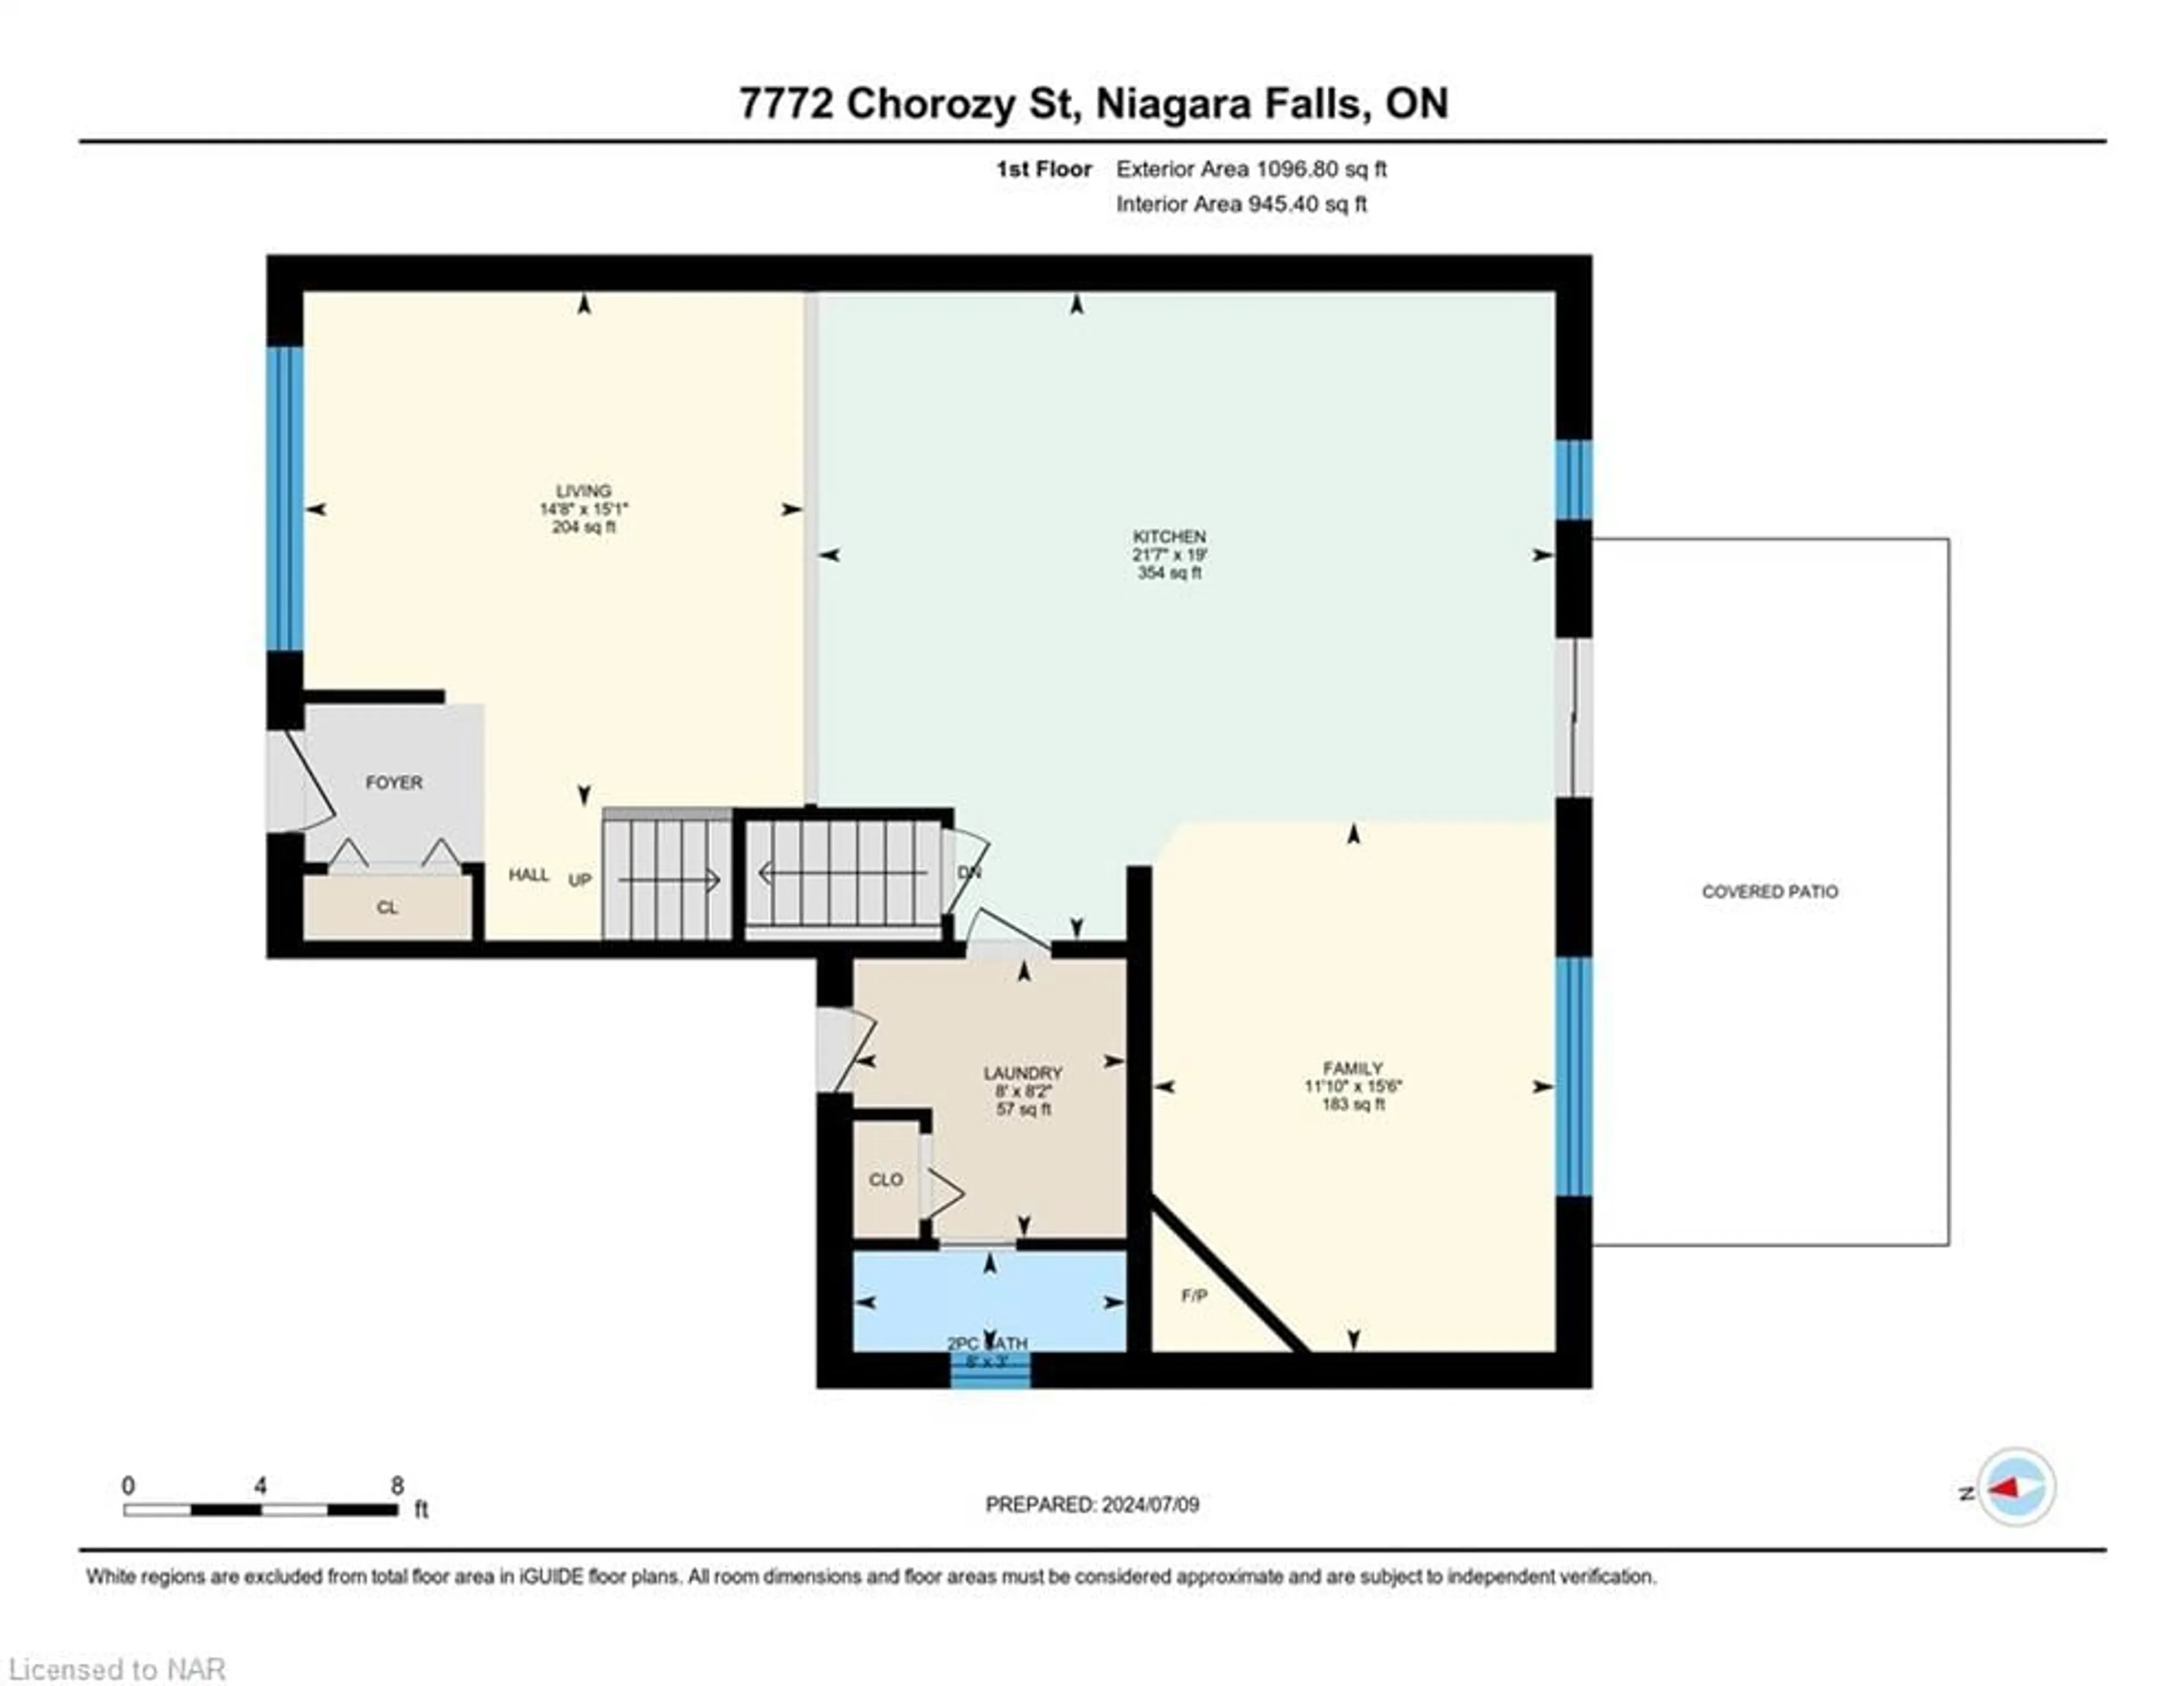 Floor plan for 7772 Chorozy St, Niagara Falls Ontario L2H 2N9